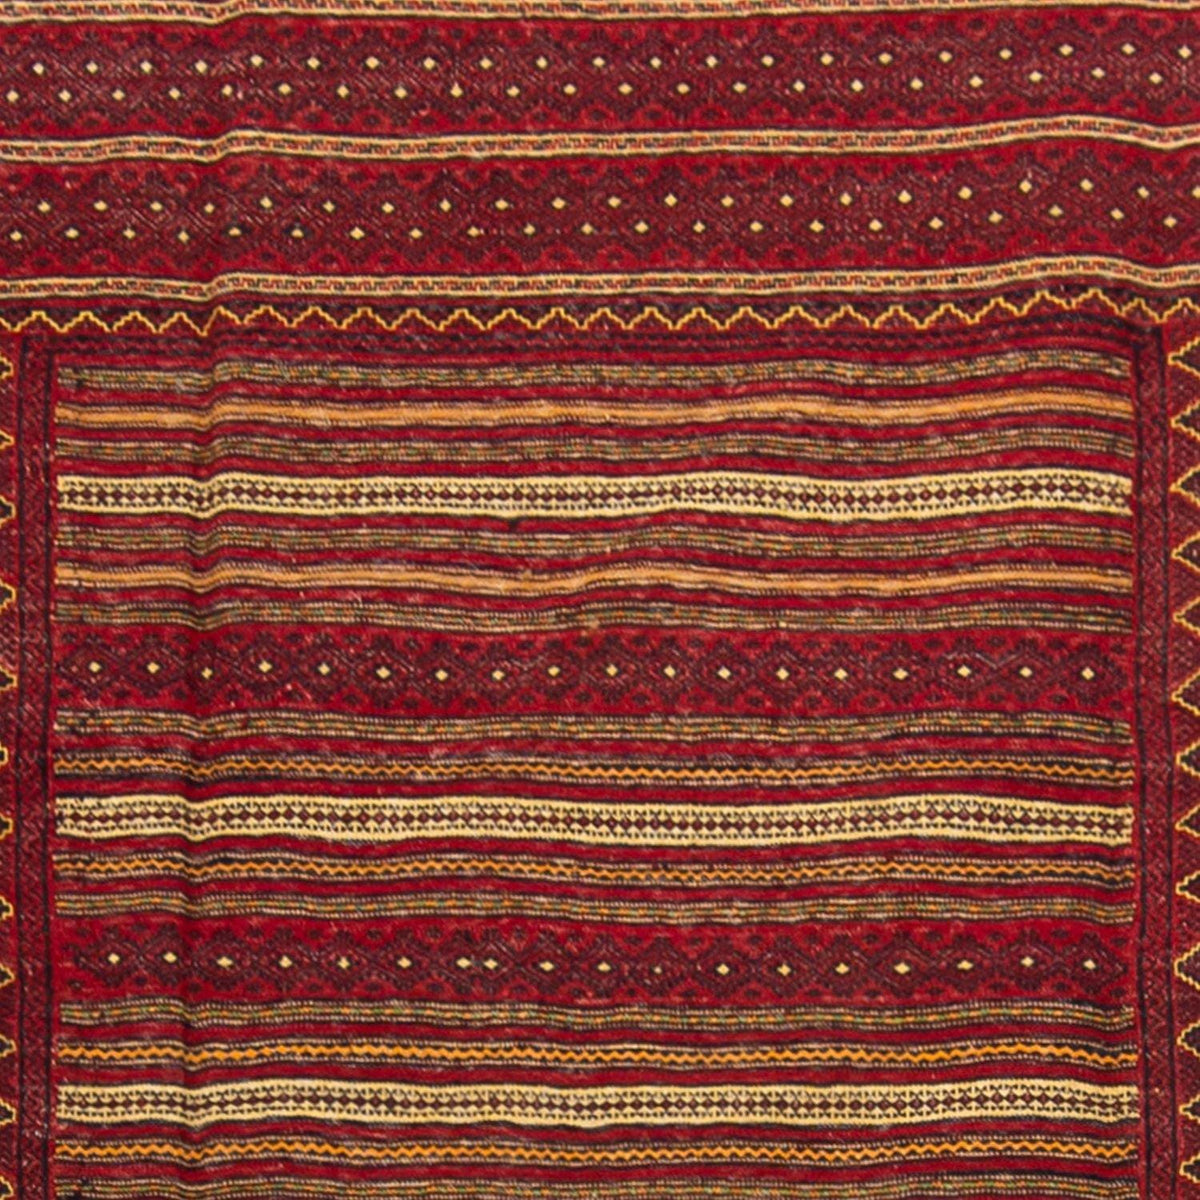 Fine Hand Woven 100% Wool Kilim Rug 153cm x 236cm